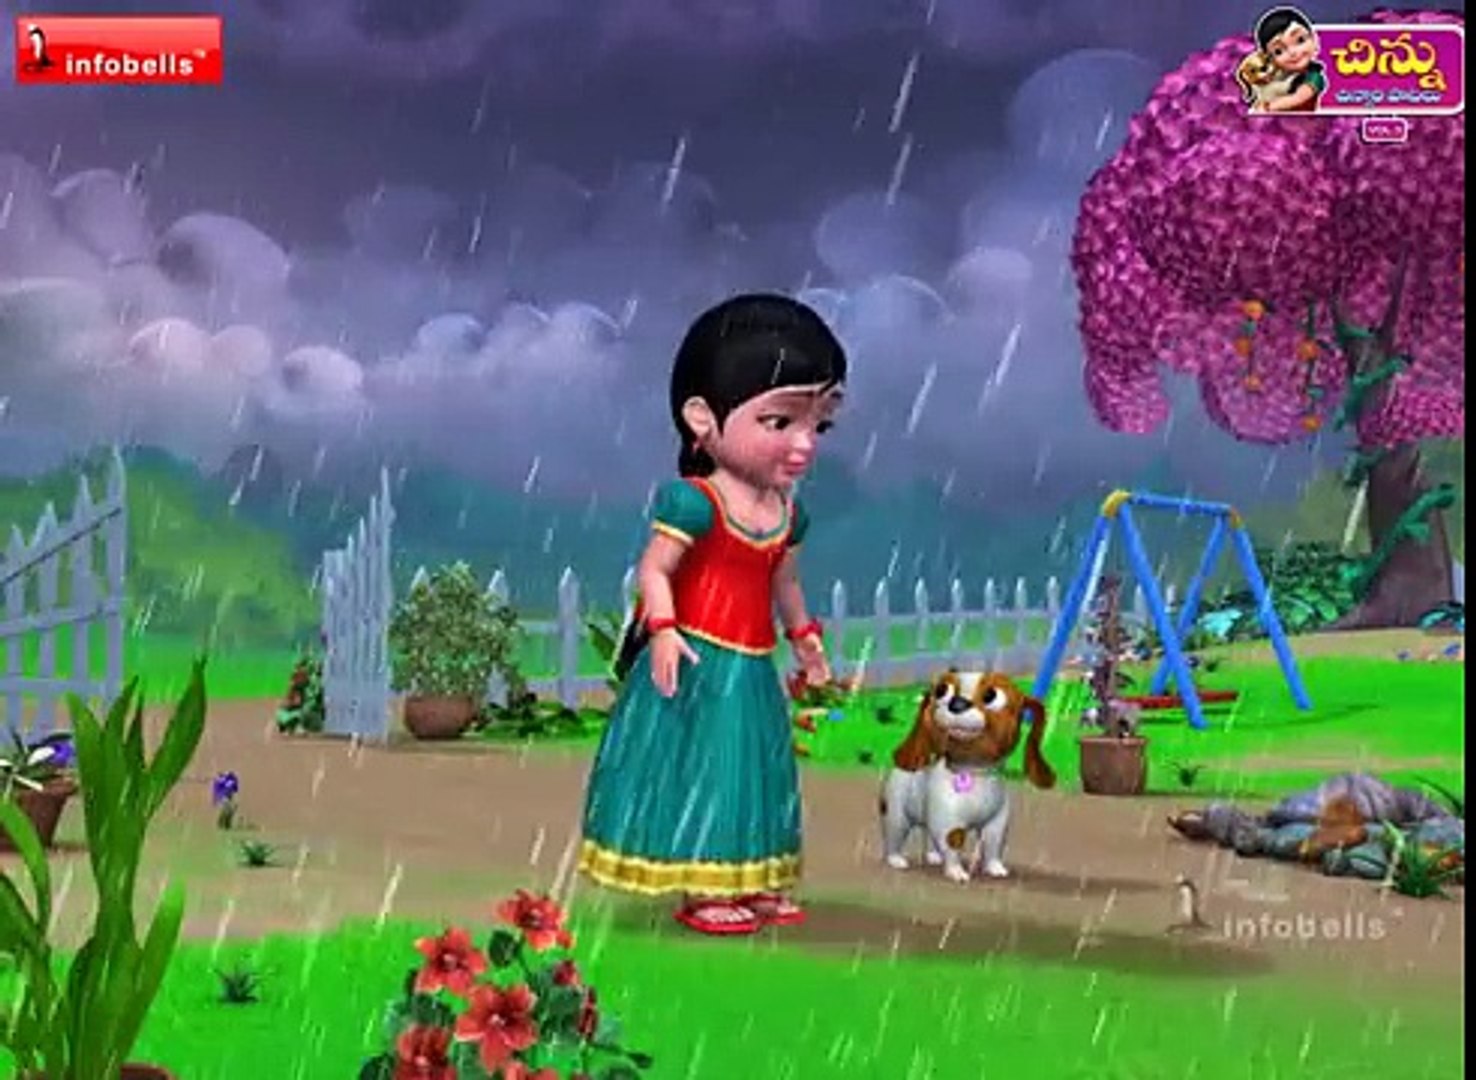 The Rain Song   Chinnu Telugu Rhymes for Children   Infobells ... Neu